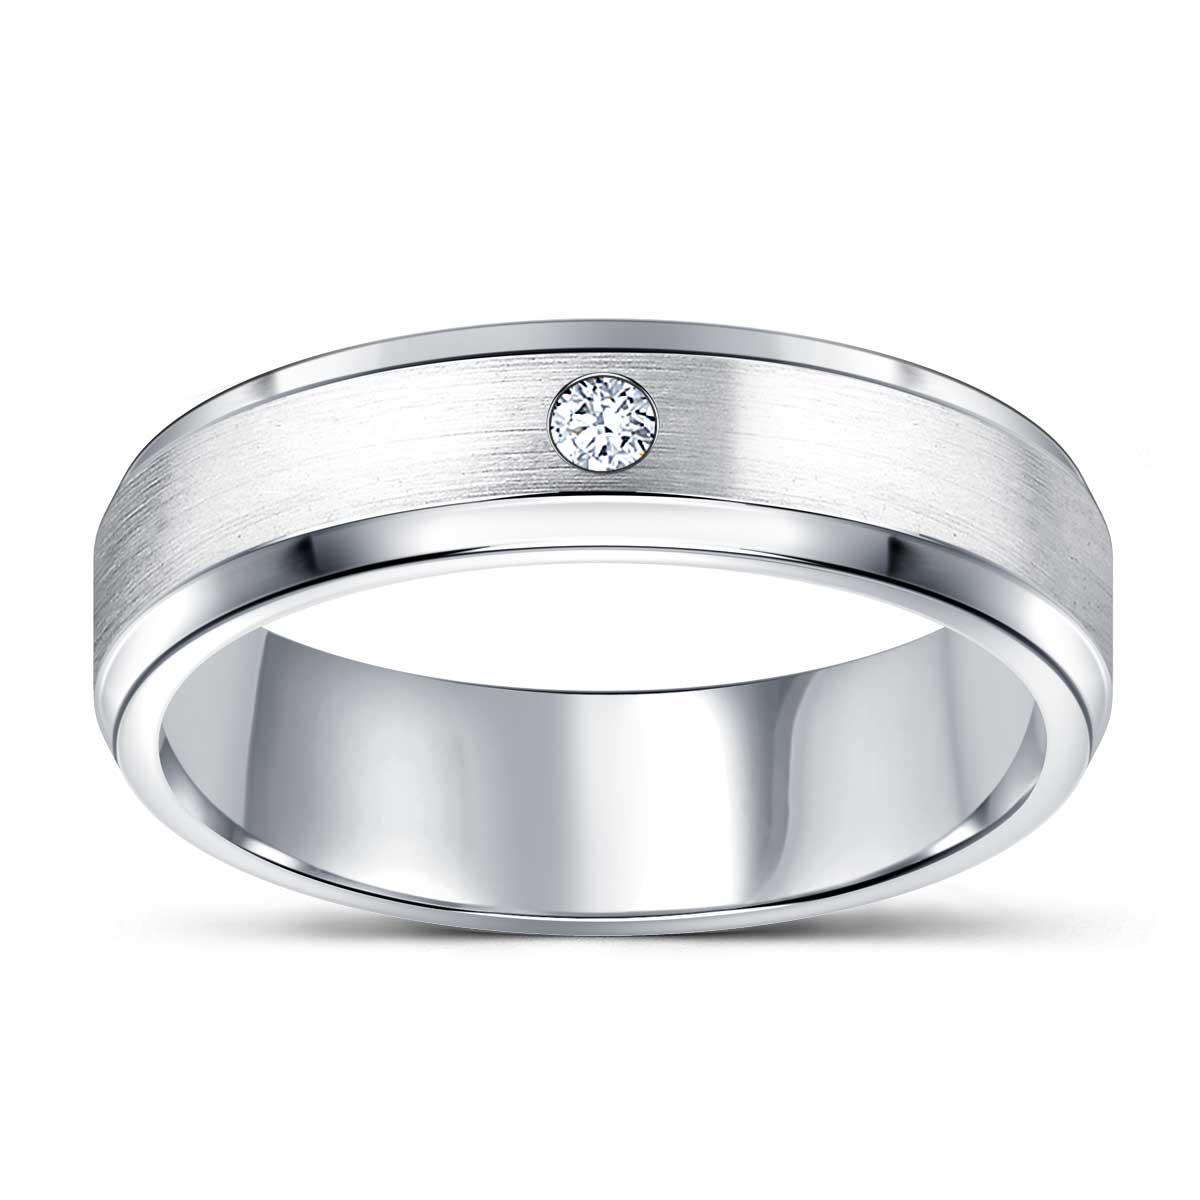 2.00 Carat Mens Diamond Ring Platinum 950 | eBay